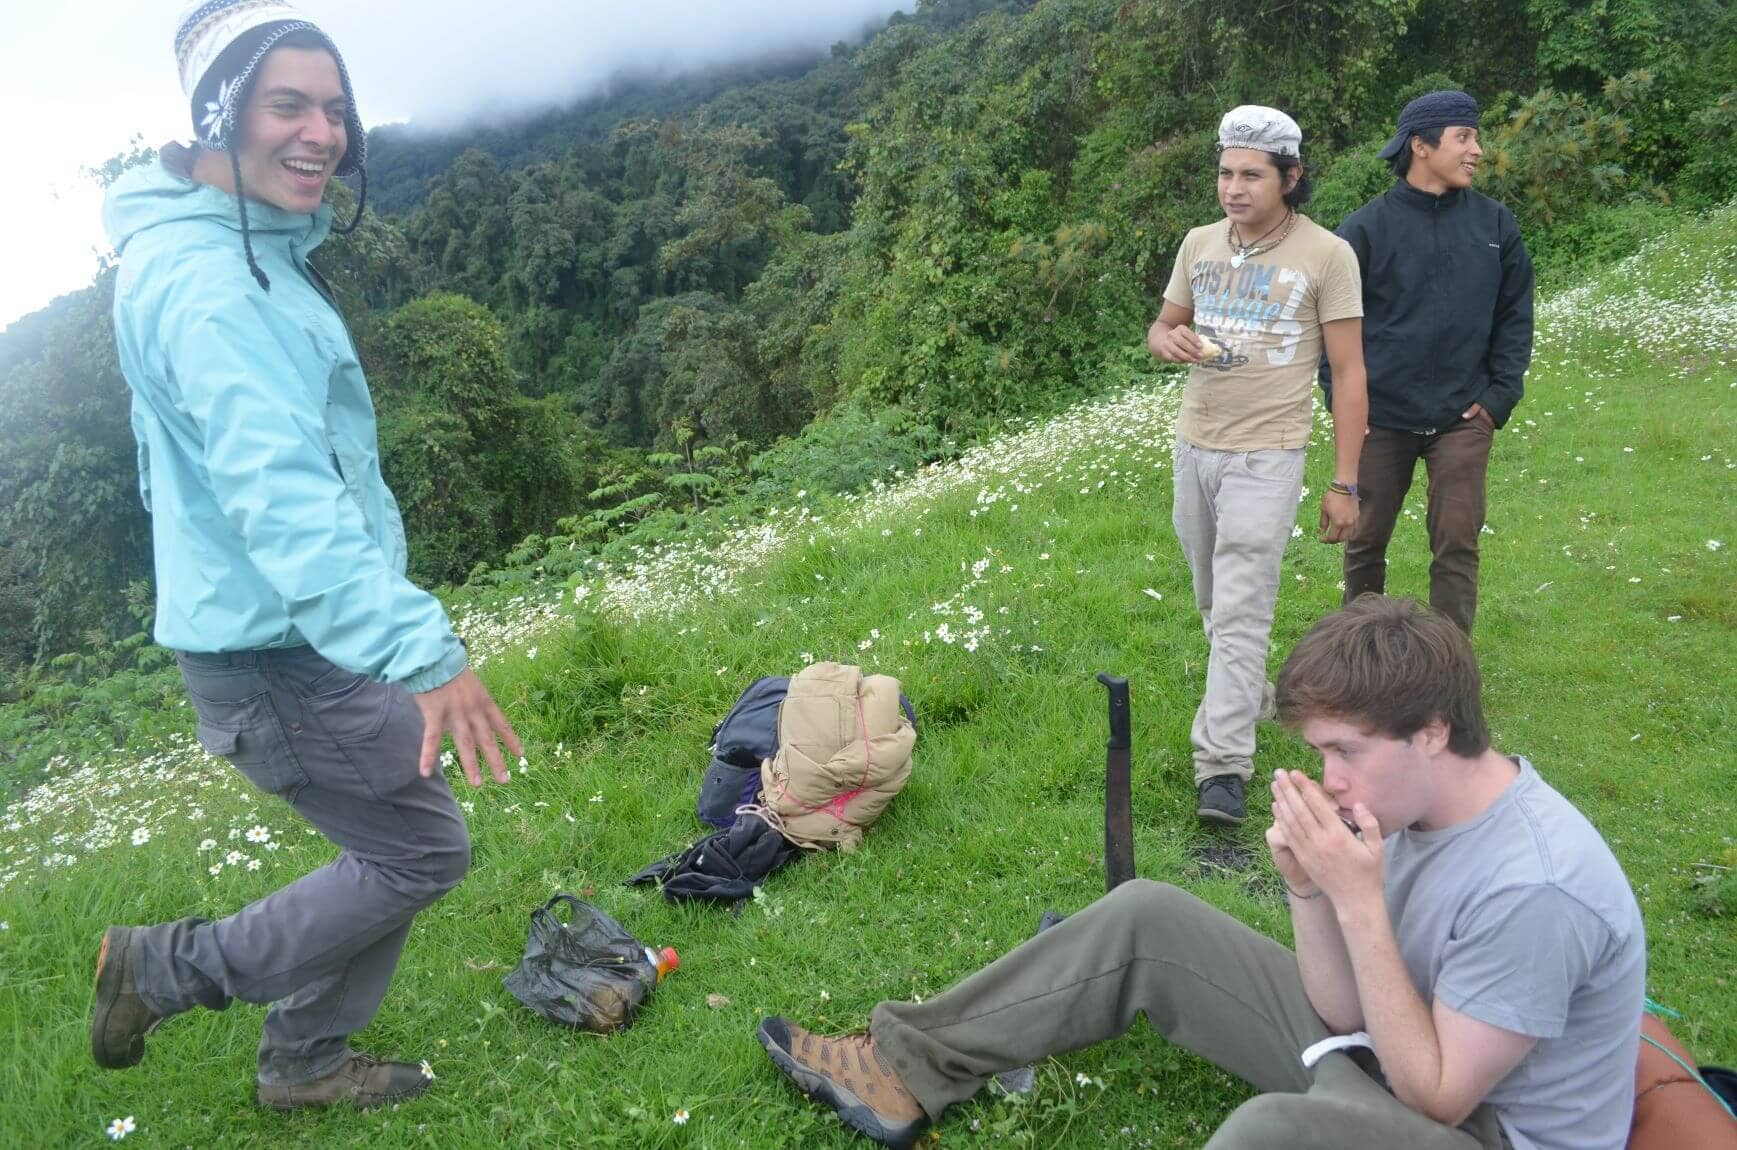 Listening to Harmonica on the way hiking up Acatenango Volcano